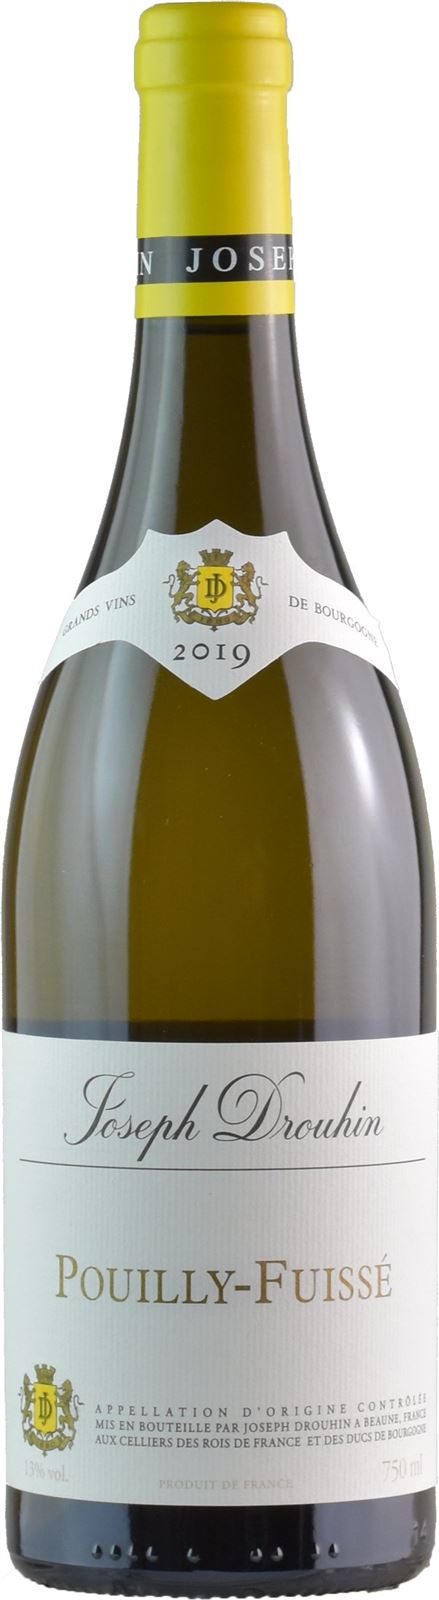 JOSEPH DROUHIN POUILLY FUISSEJ AOC/AOP Chardonnay - 750 ml